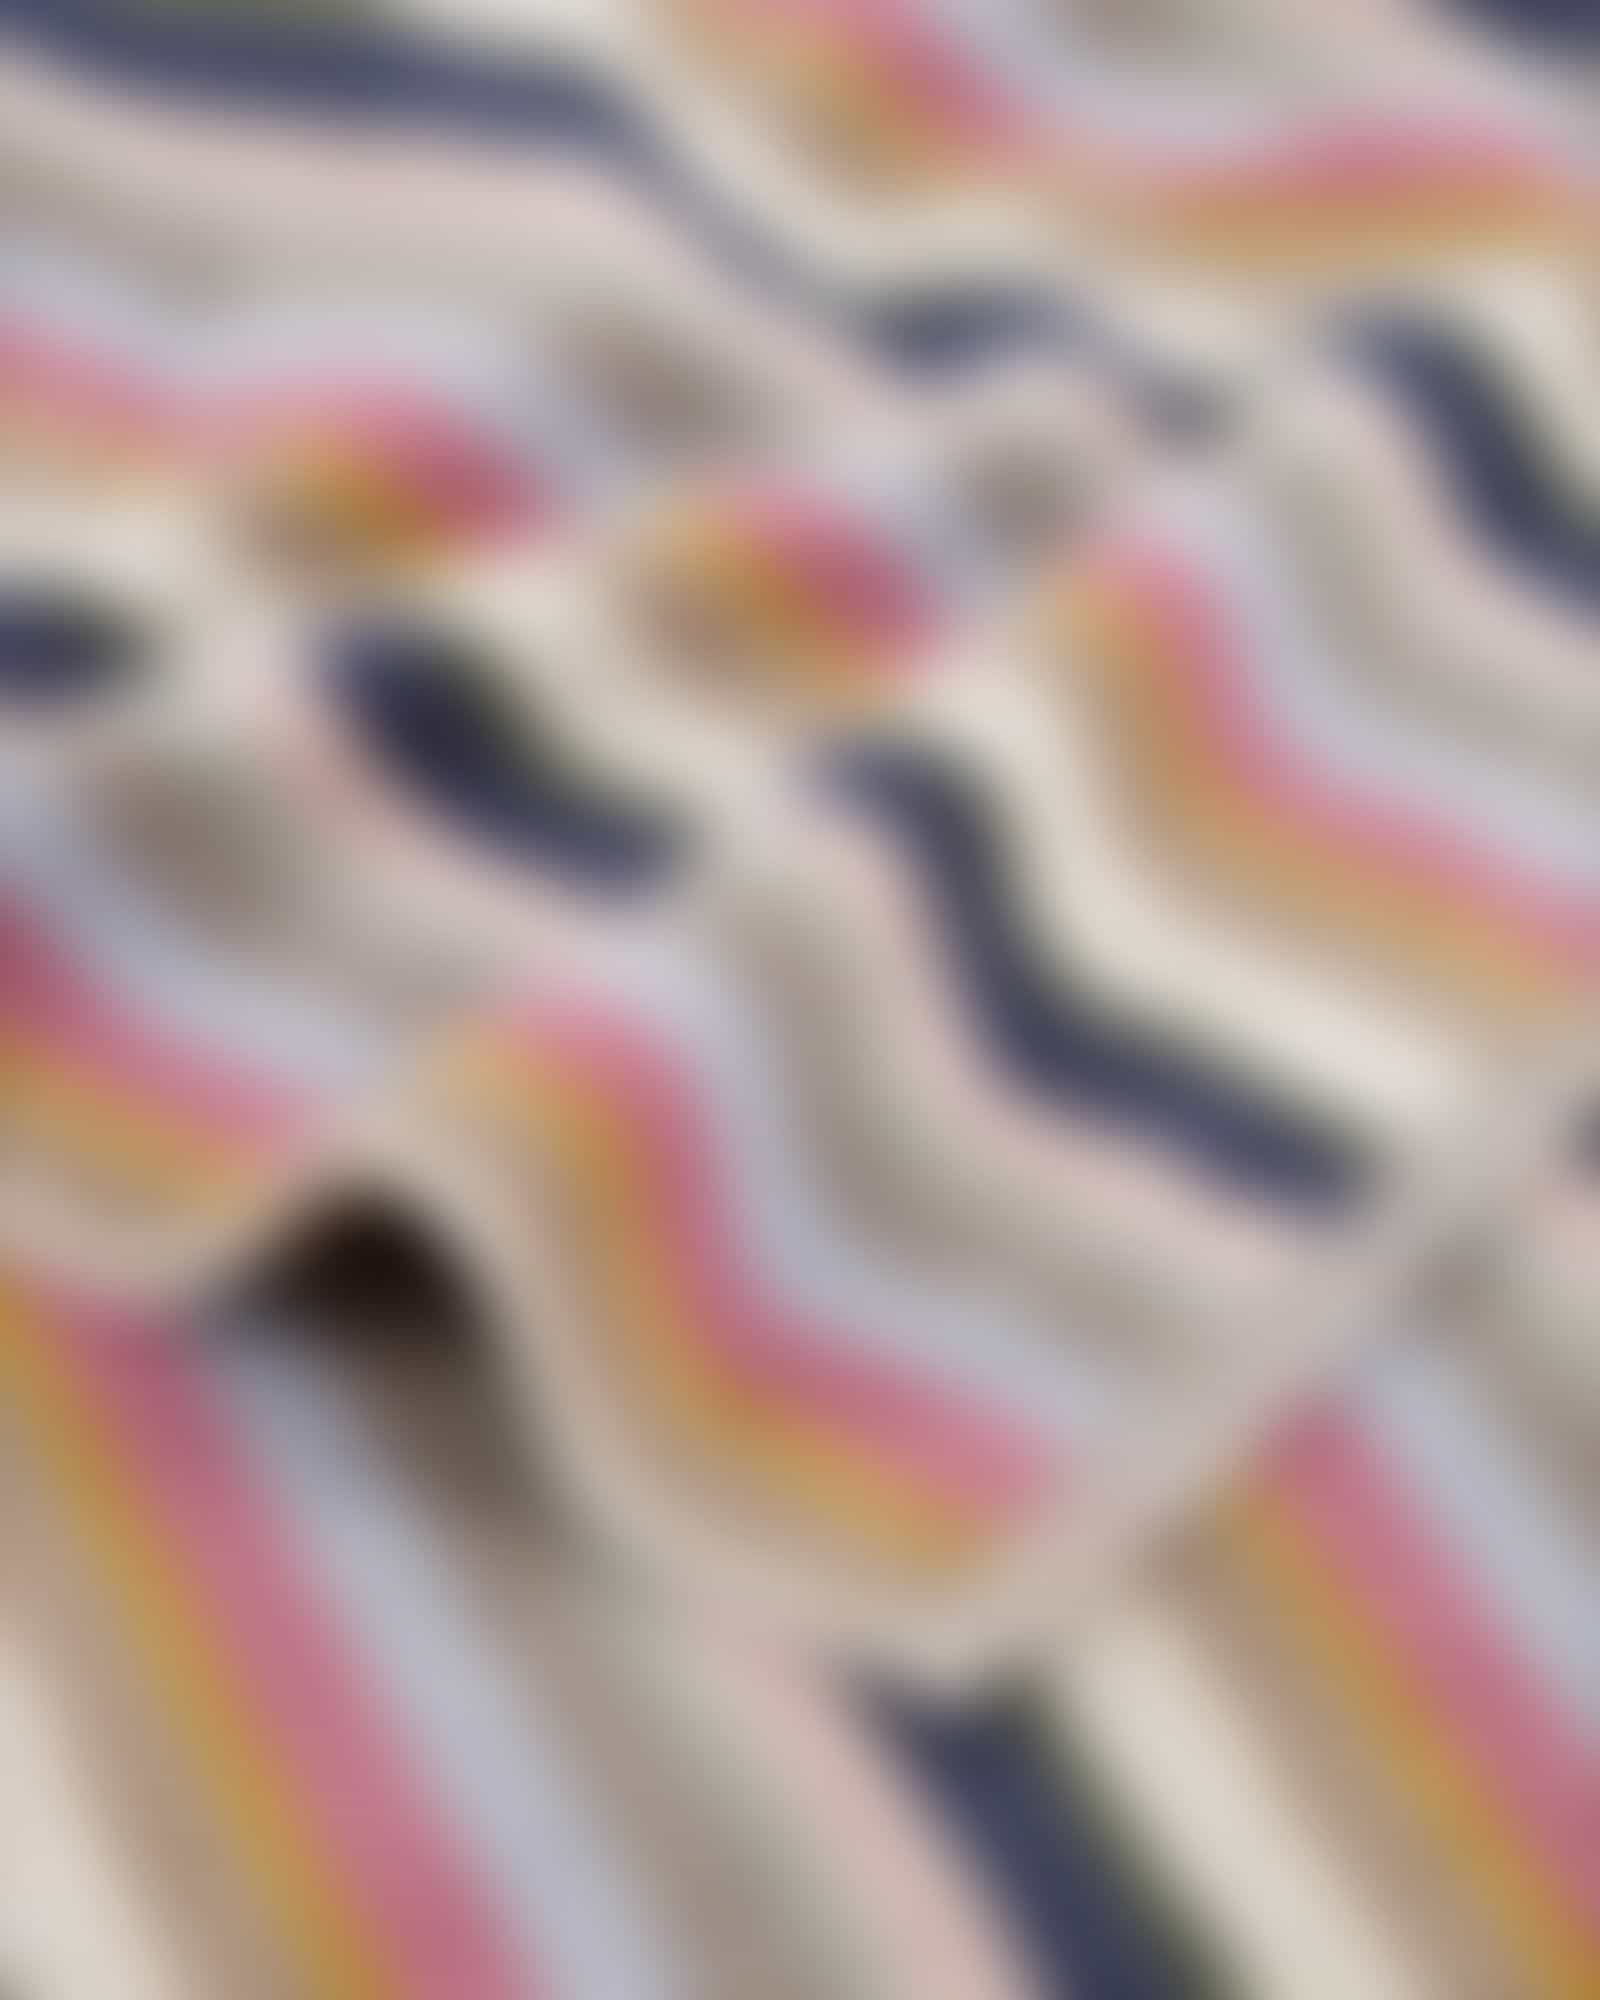 Villeroy &amp; Boch Handtücher Coordinates Stripes 2551 - Farbe: multicolor - 12 - Waschhandschuh 16x22